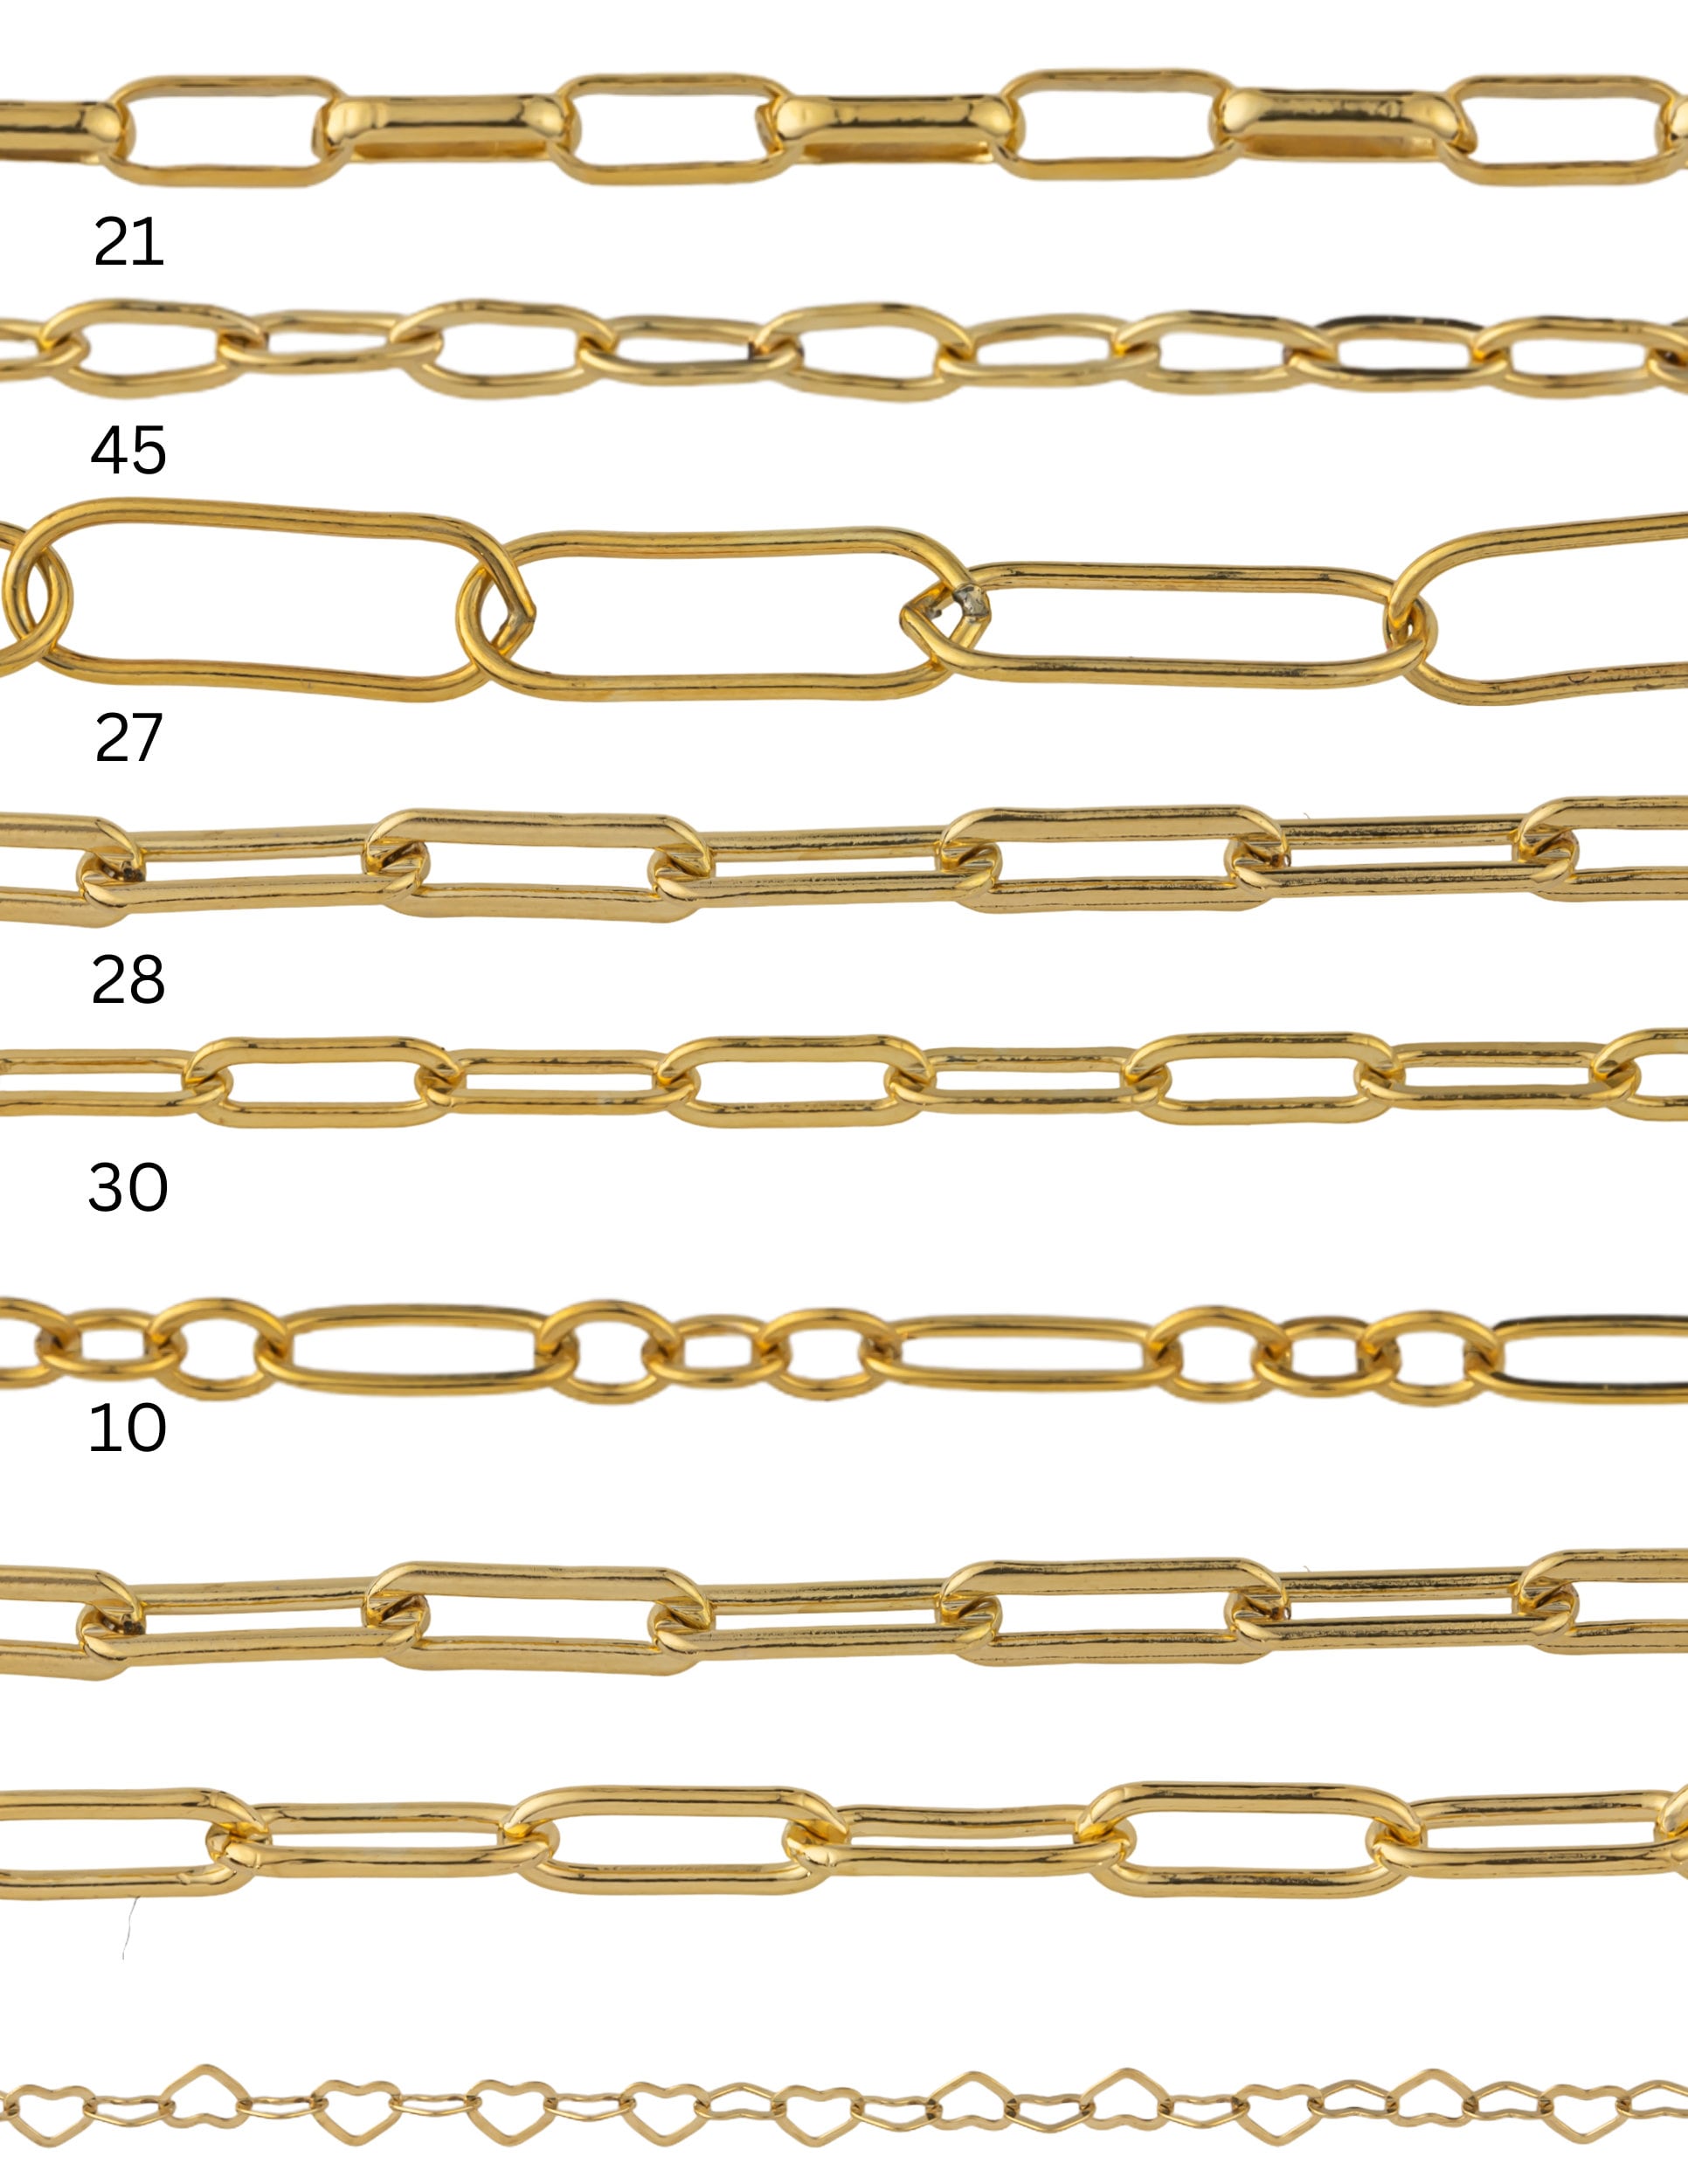  NOLITOY 1 Roll Cross Chain Permanent Bracelet Kit Gold